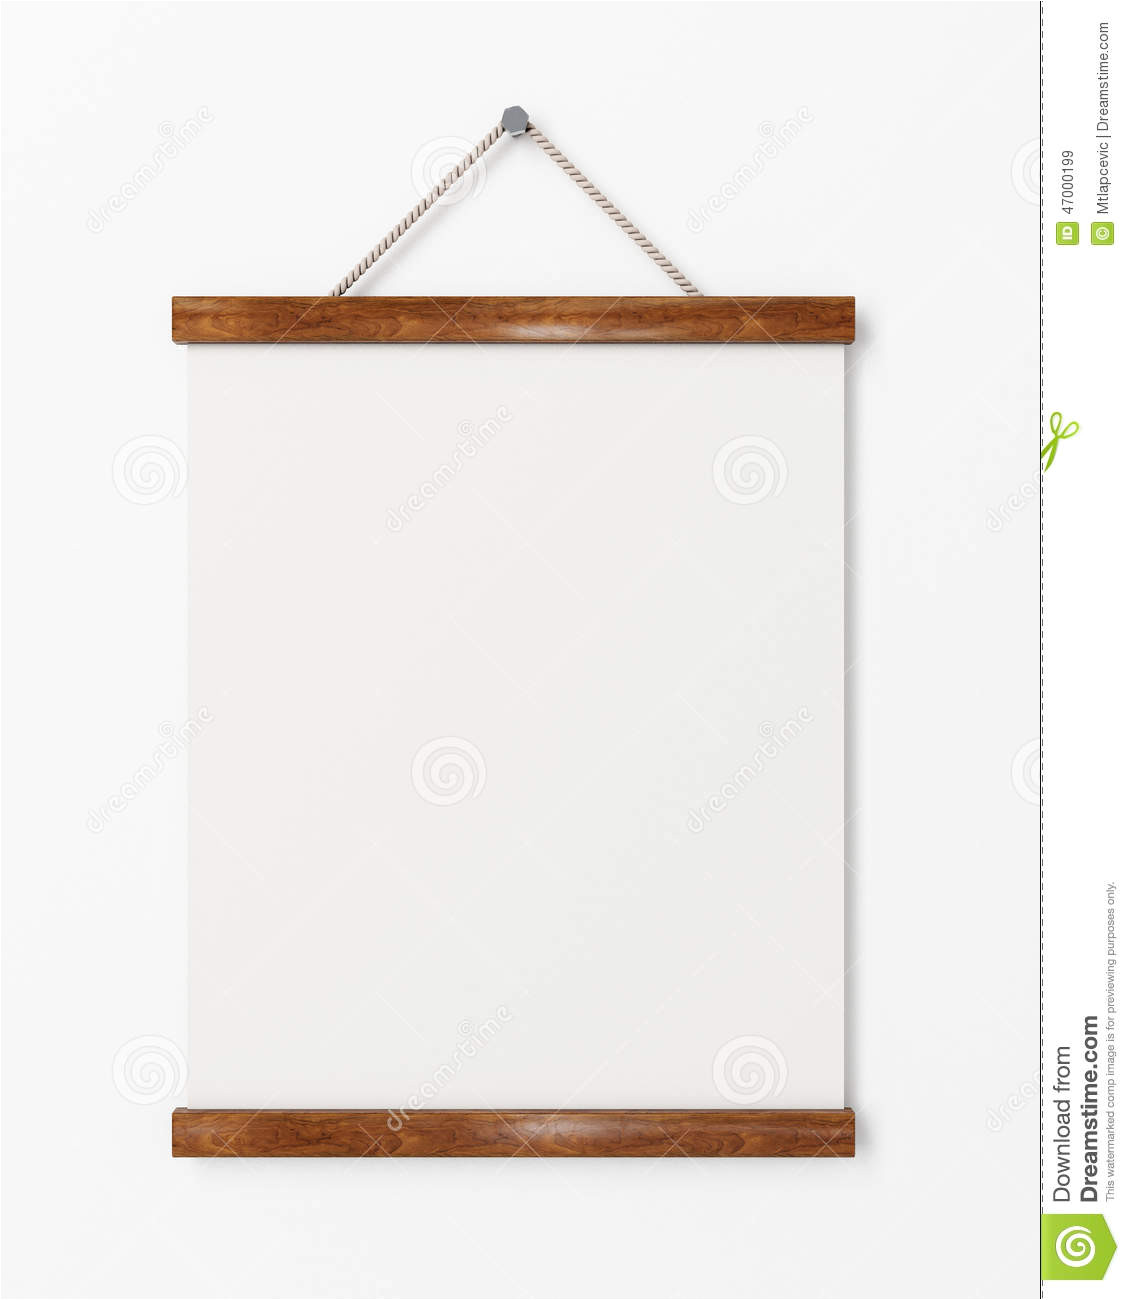 stock illustration mock up blank poster wooden frame hanging white wall background template design image47000199